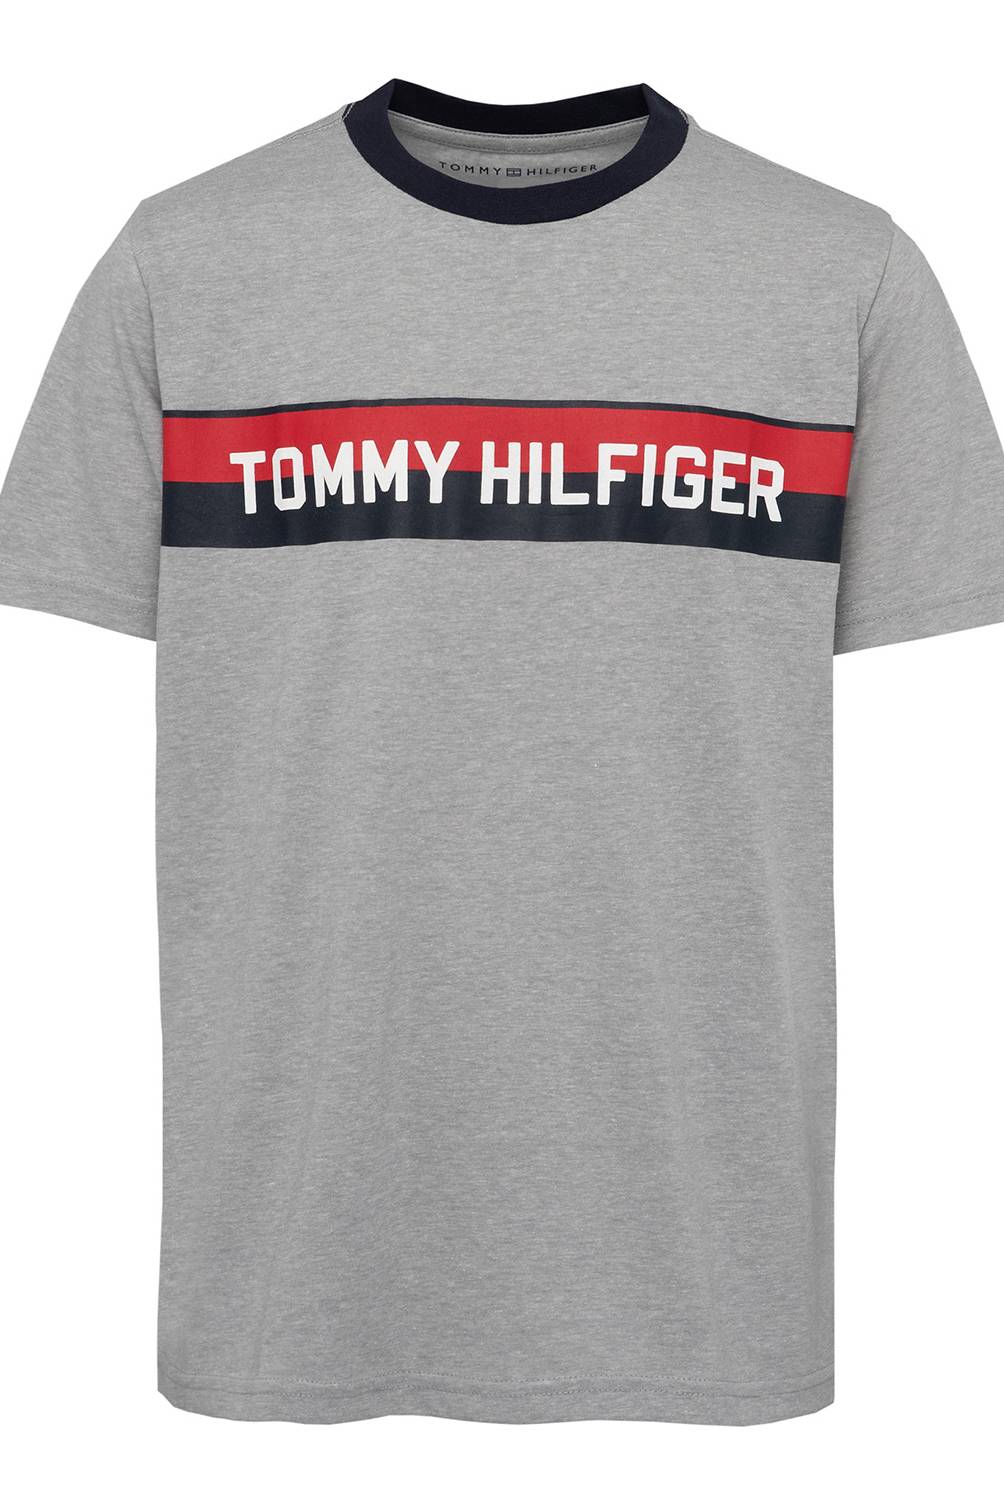 TOMMY HILFIGER - Camiseta Niño Tommy Hilfiger